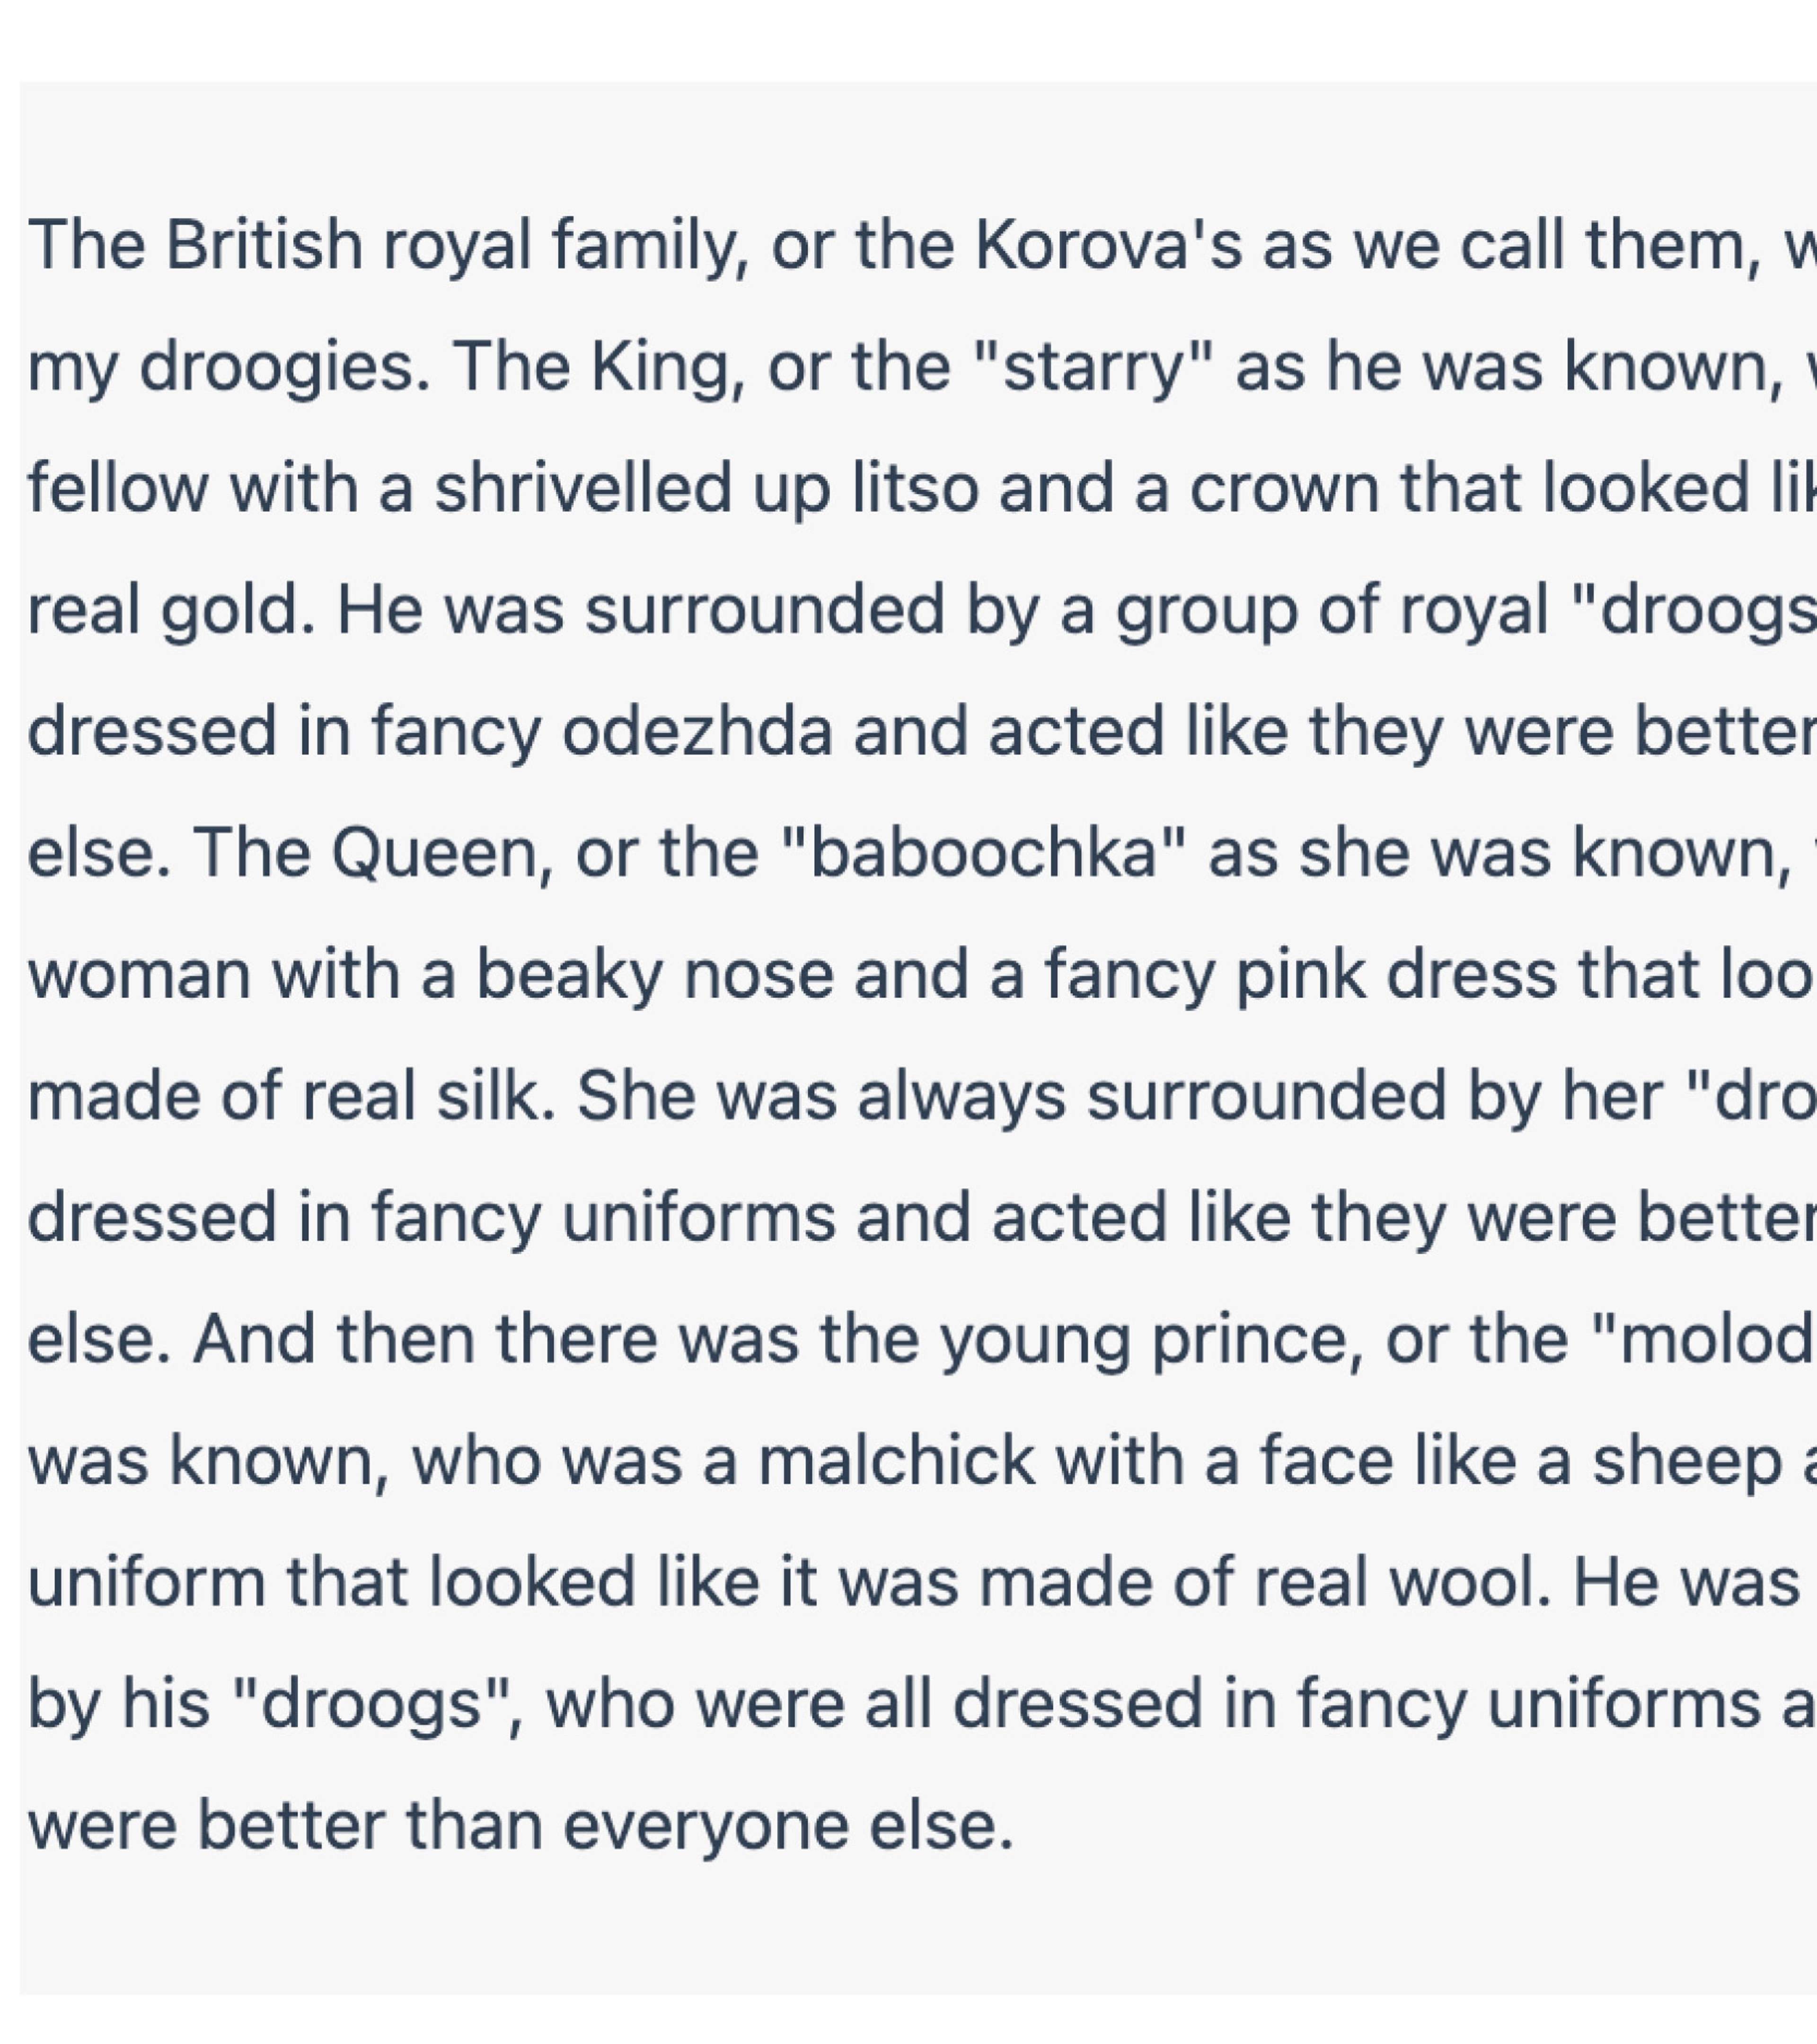 A Clockwork Orange style prose describing the British royal family.